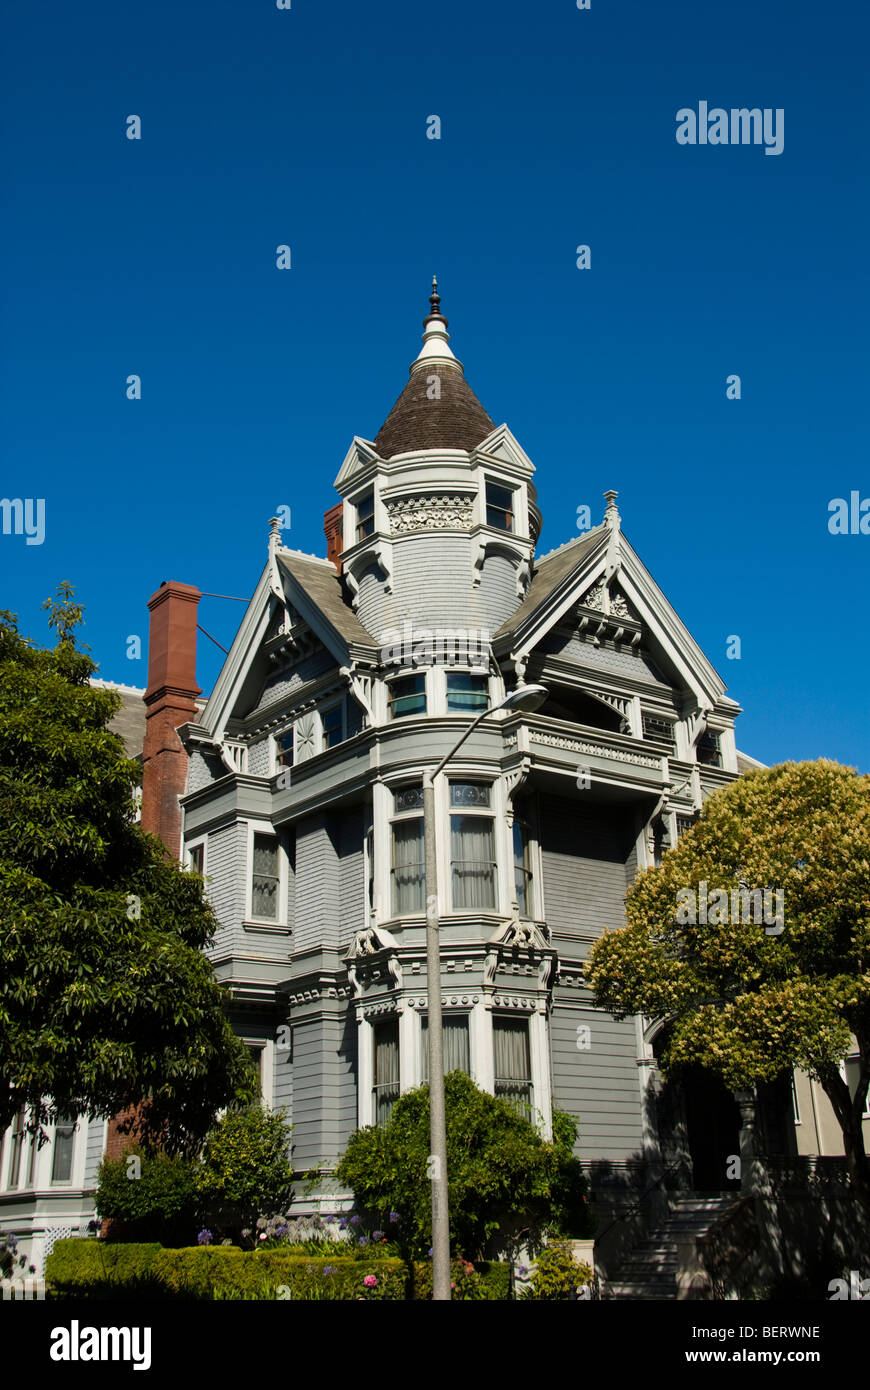 Californie : San Francisco. Haas-Lilienthal house victorienne. Photo copyright Lee Foster. Photo #  : 22-casanf83808 Banque D'Images